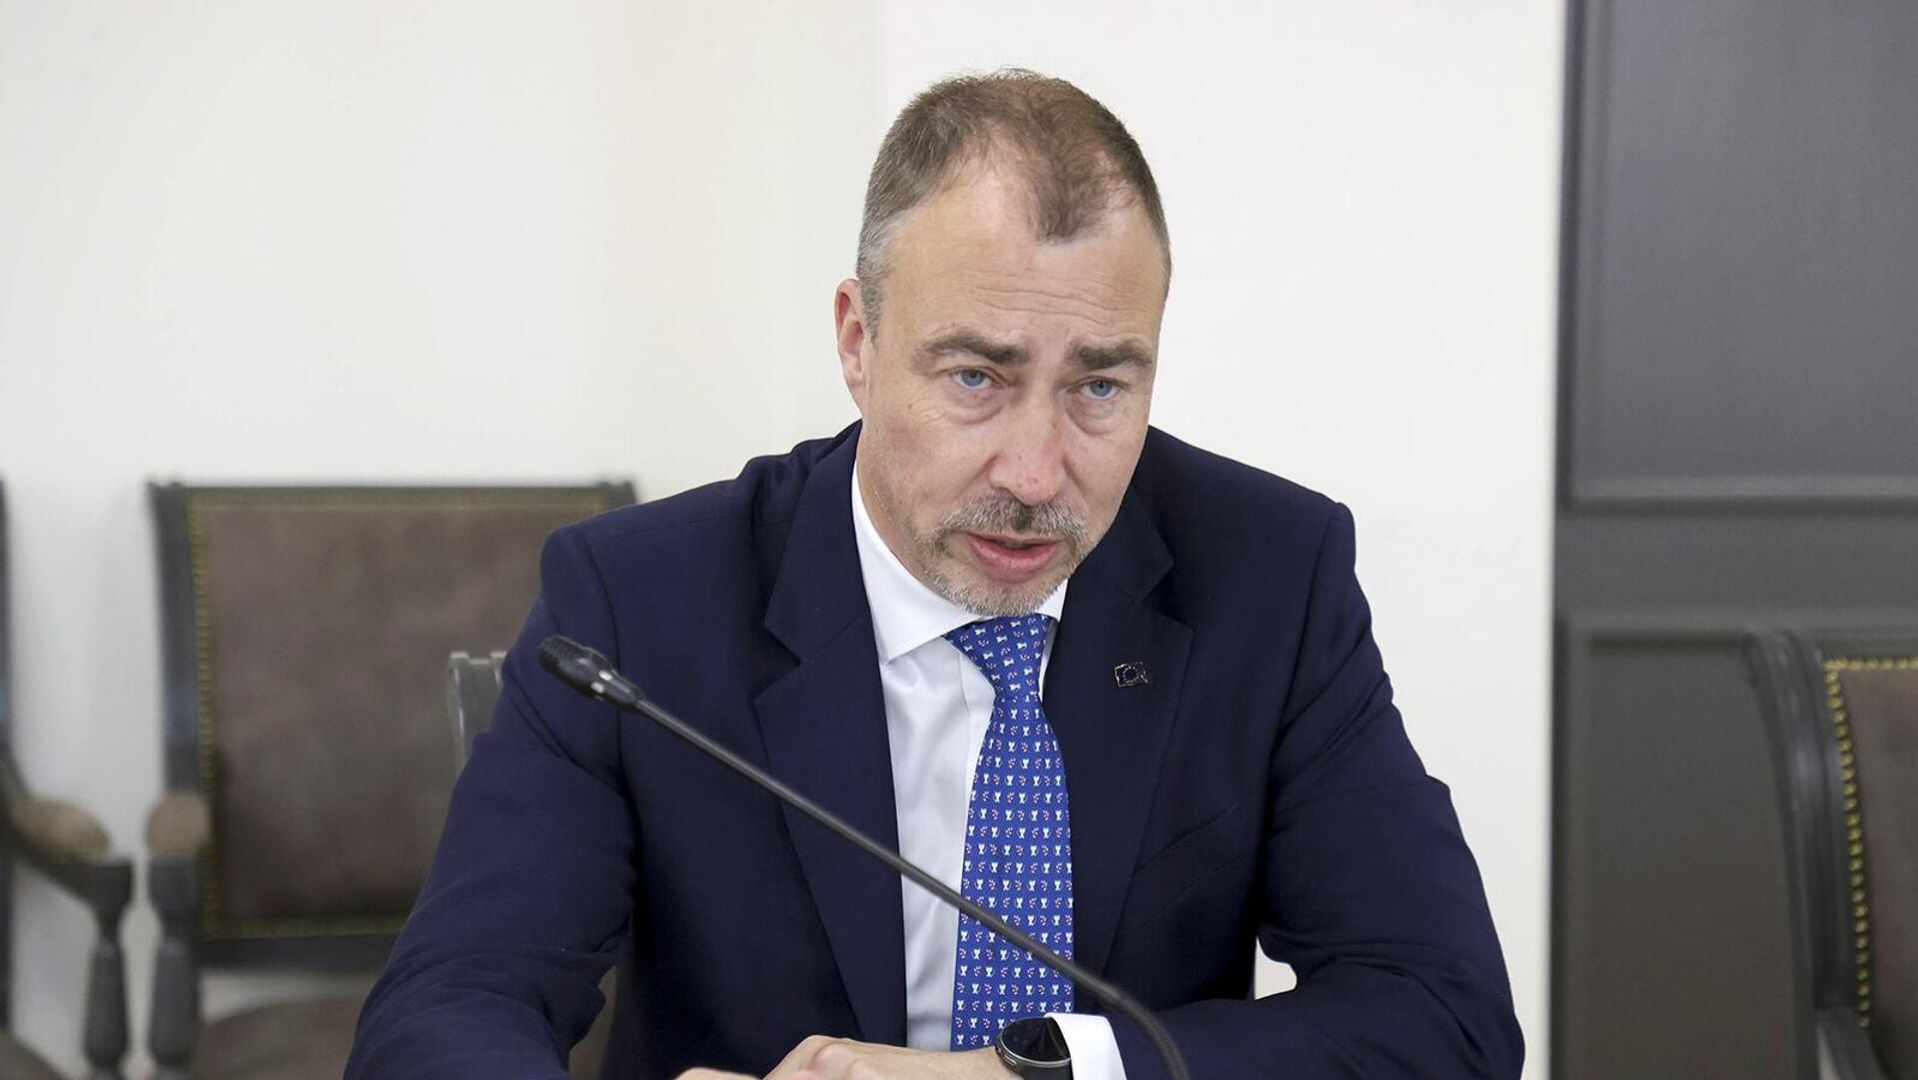 Toivo Klaar: European Mission in Armenia has not observed any unusual movement